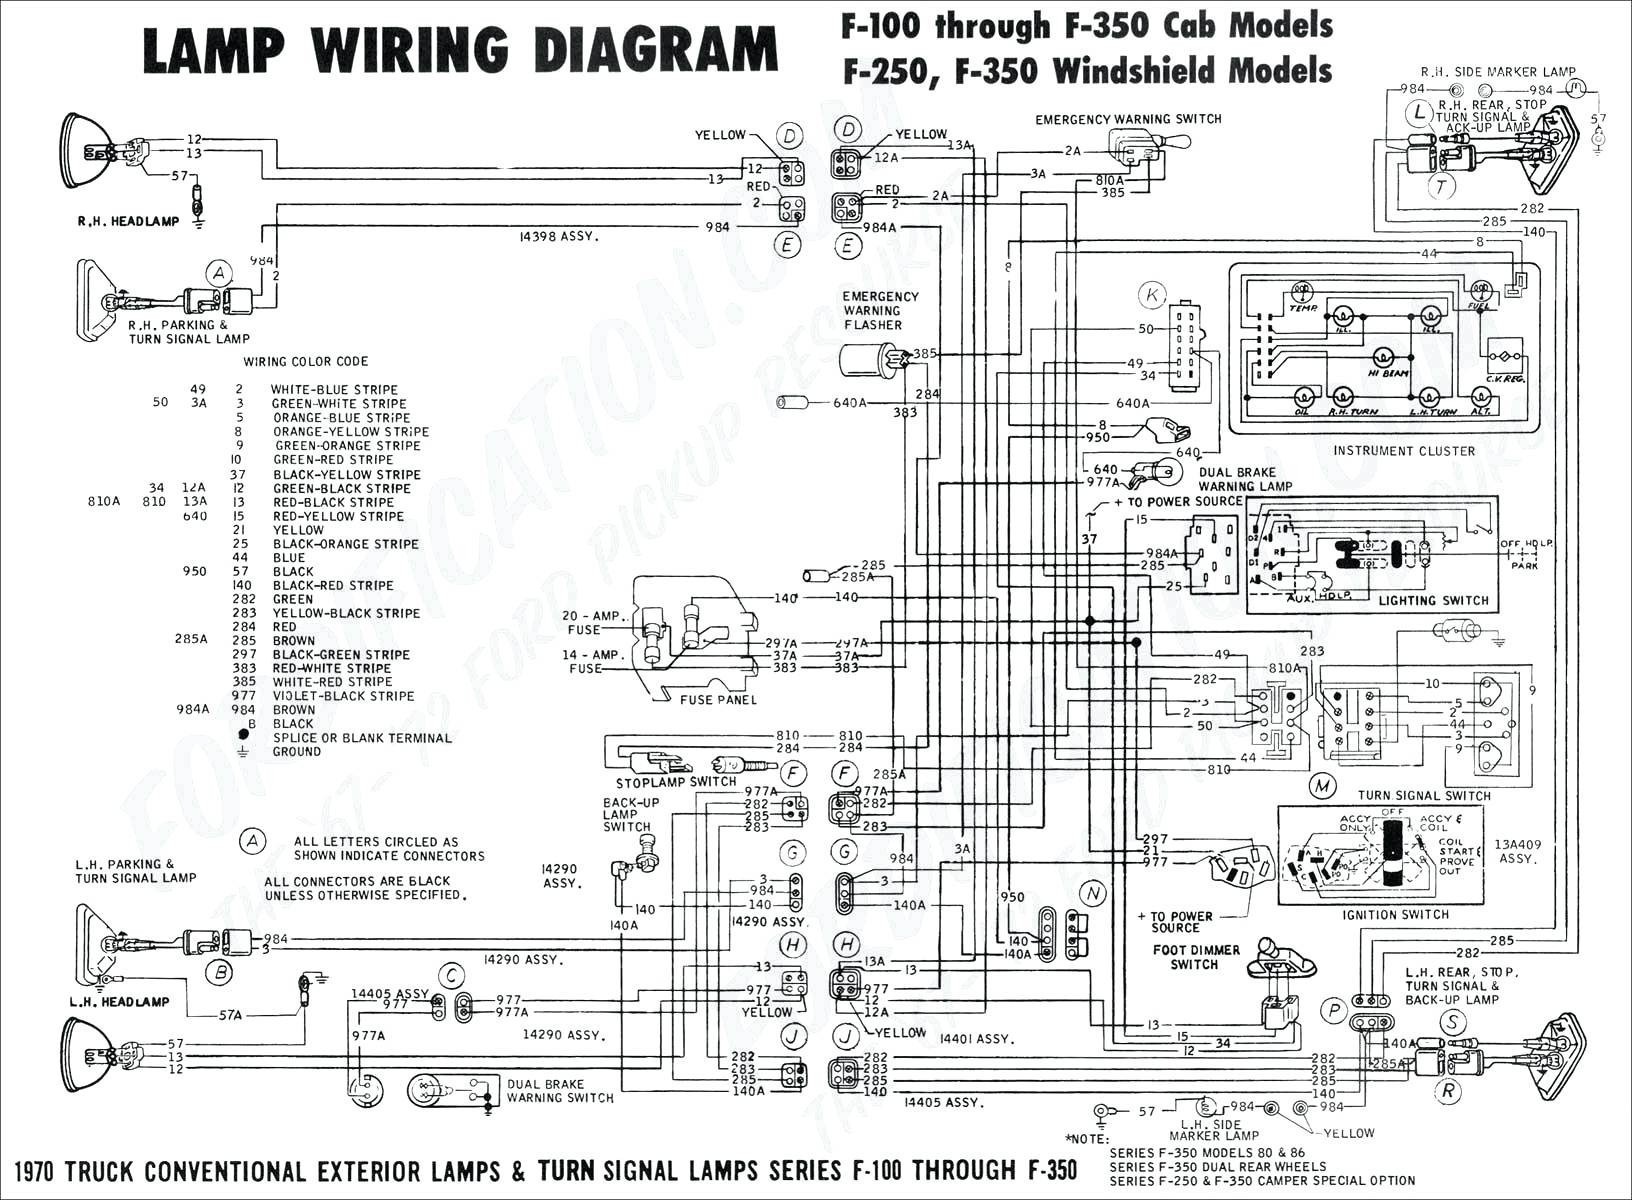 2002 Dodge Dakota Parts Diagram 96 Dodge Dakota Radio Wiring Diagram Of 2002 Dodge Dakota Parts Diagram